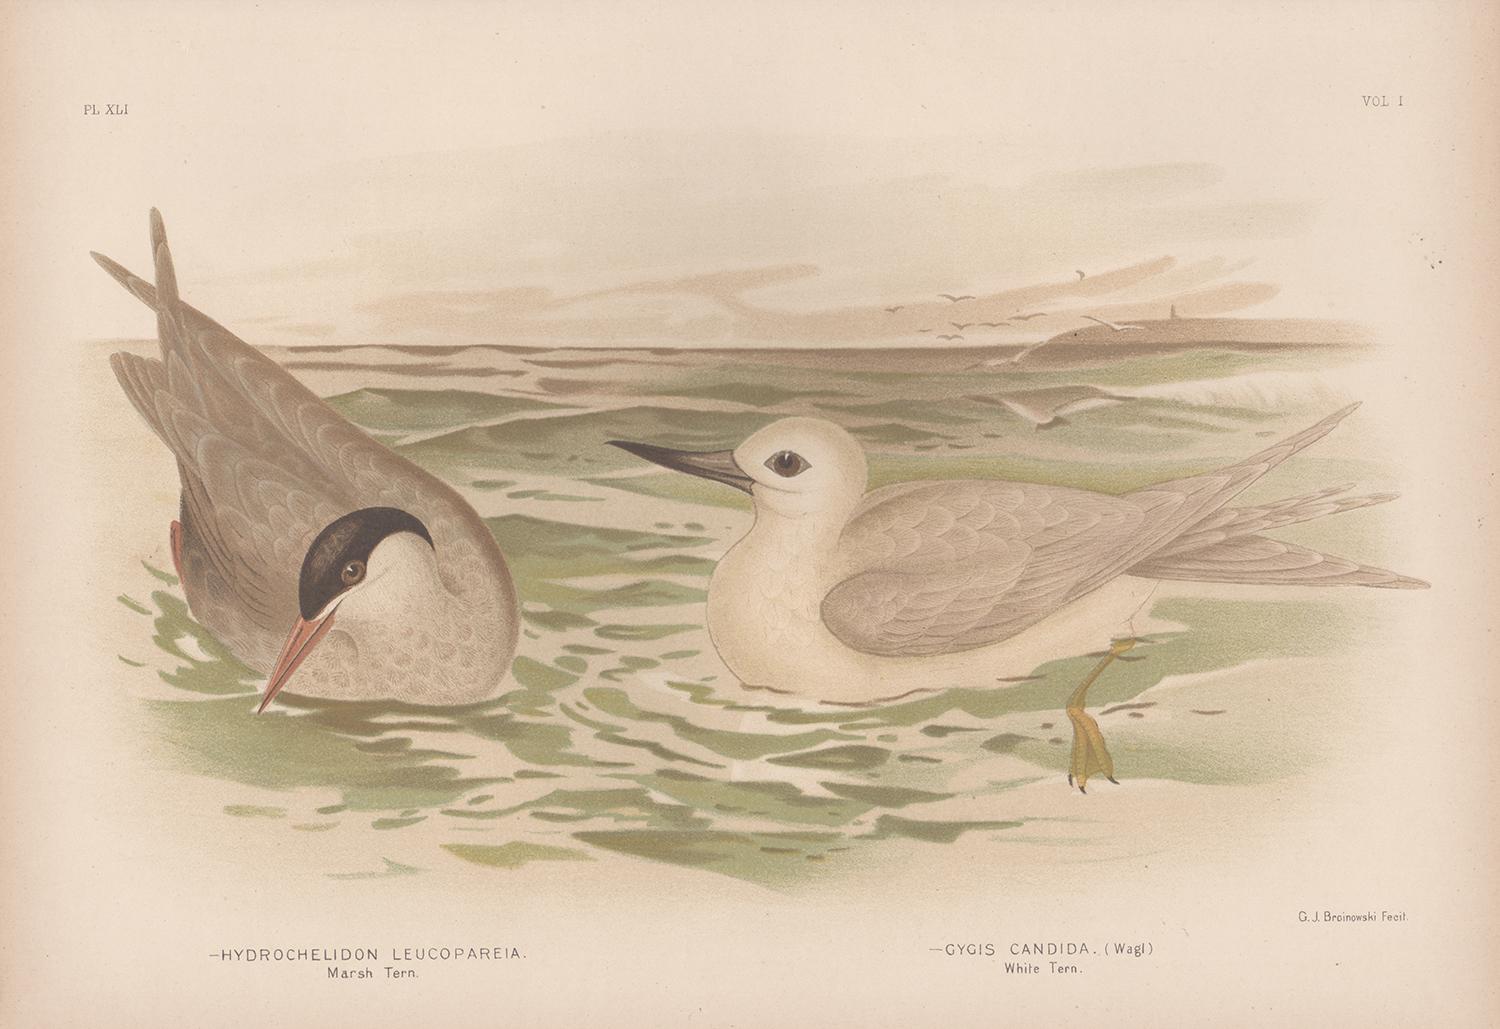 Gracius Broinowski Animal Print - Marsh Tern and White Tern, antique sea bird chromolithograph print, 1889